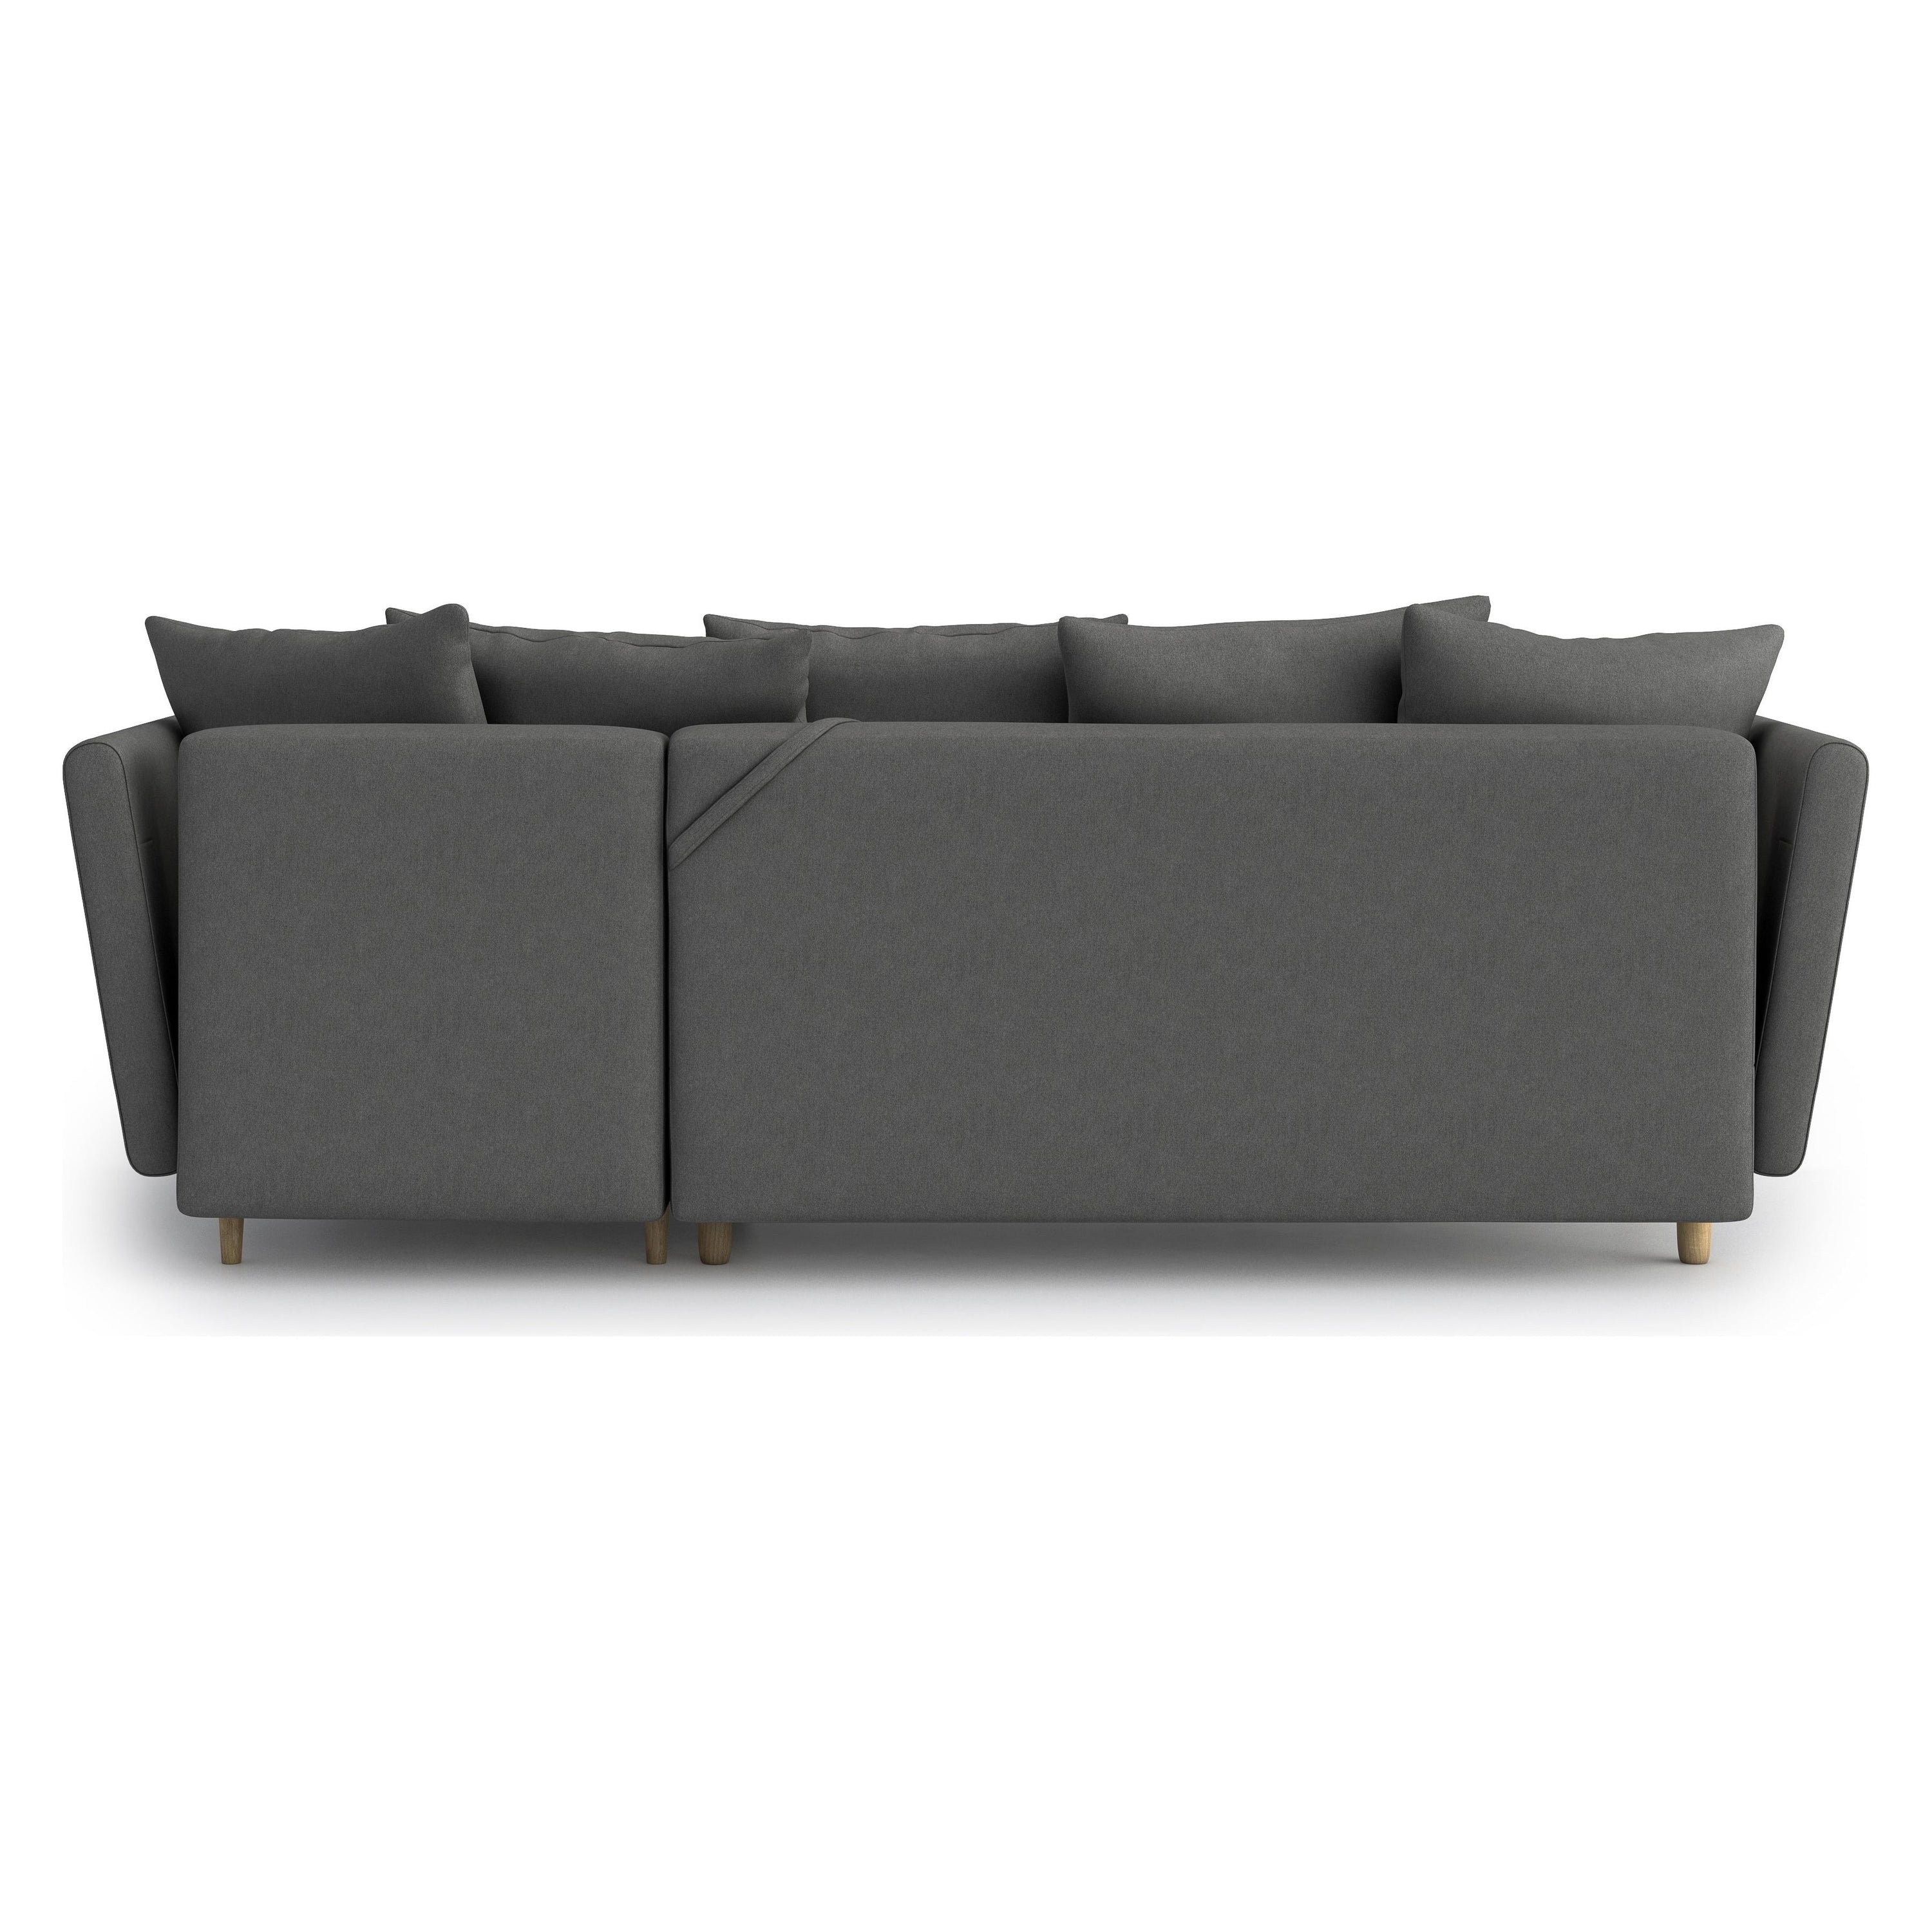 JOLEEN kampinė sofa lova, tamsiai pilka spalva, universali kampo pusė